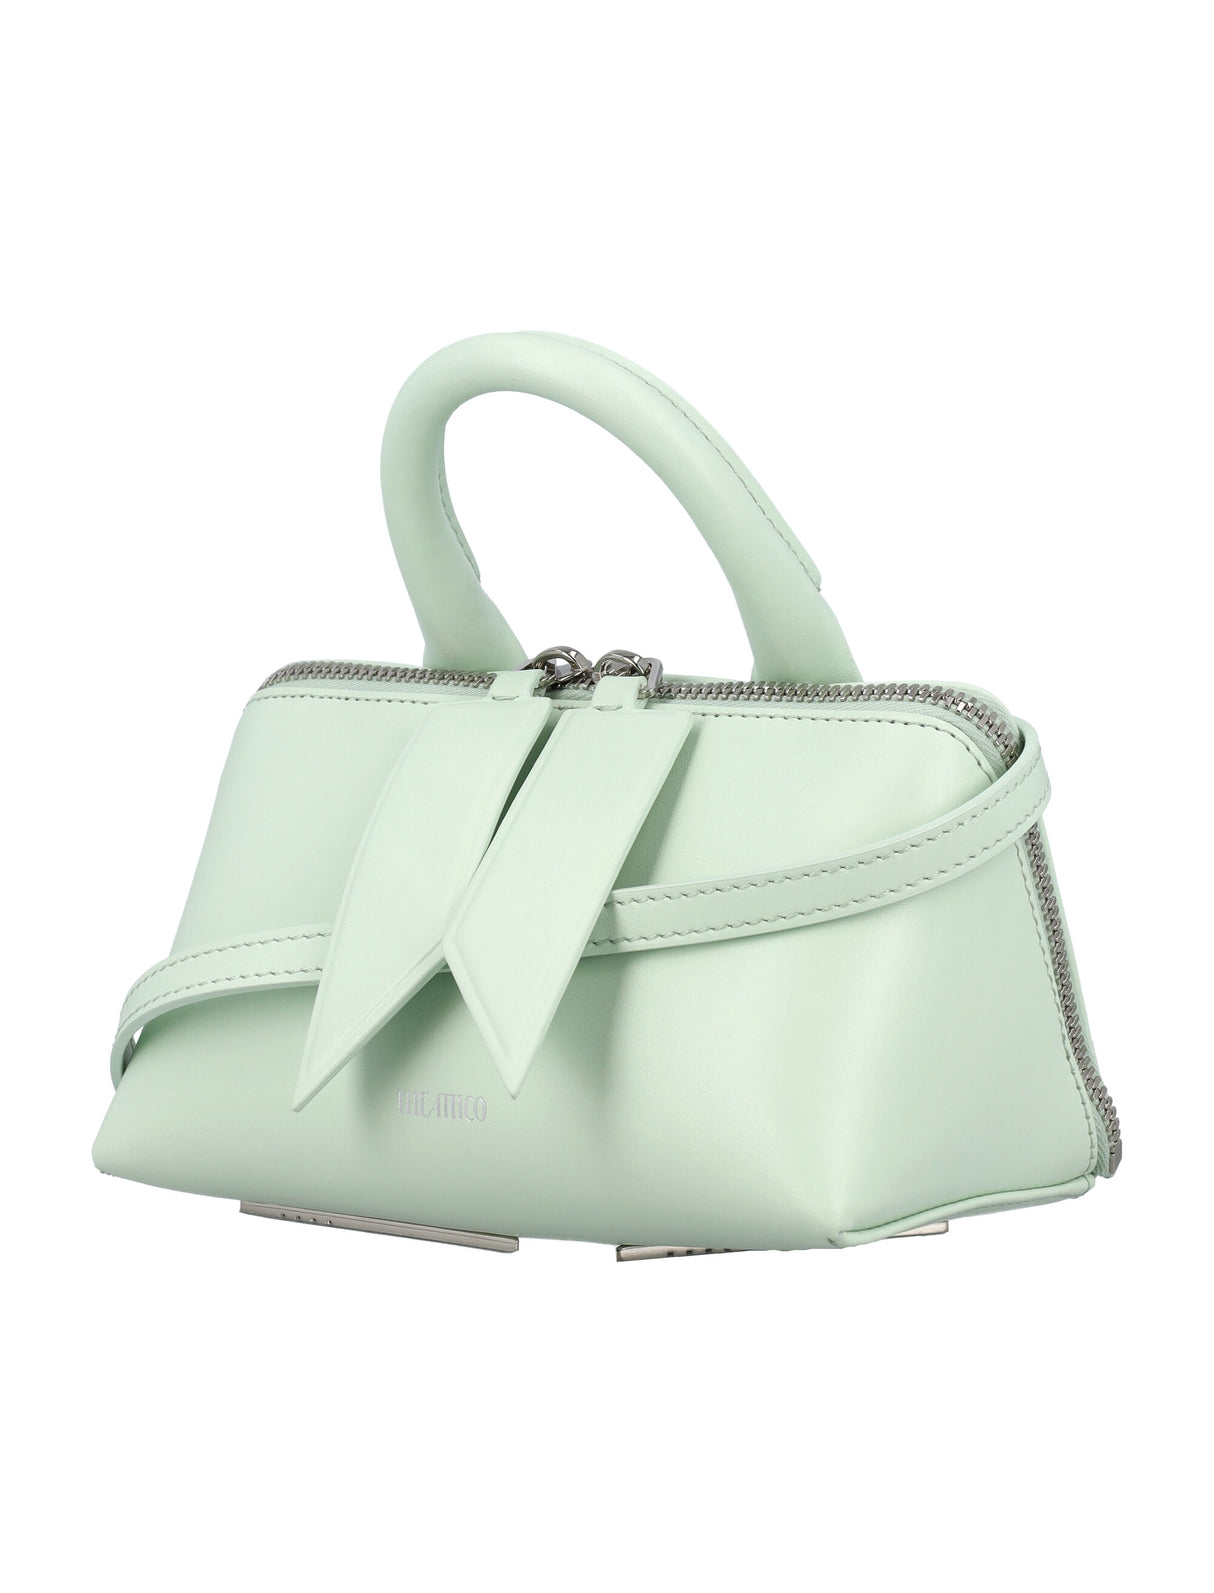 THE ATTICO Aqua Mini Friday Handbag with Top Handle & Detachable Strap - 20cm